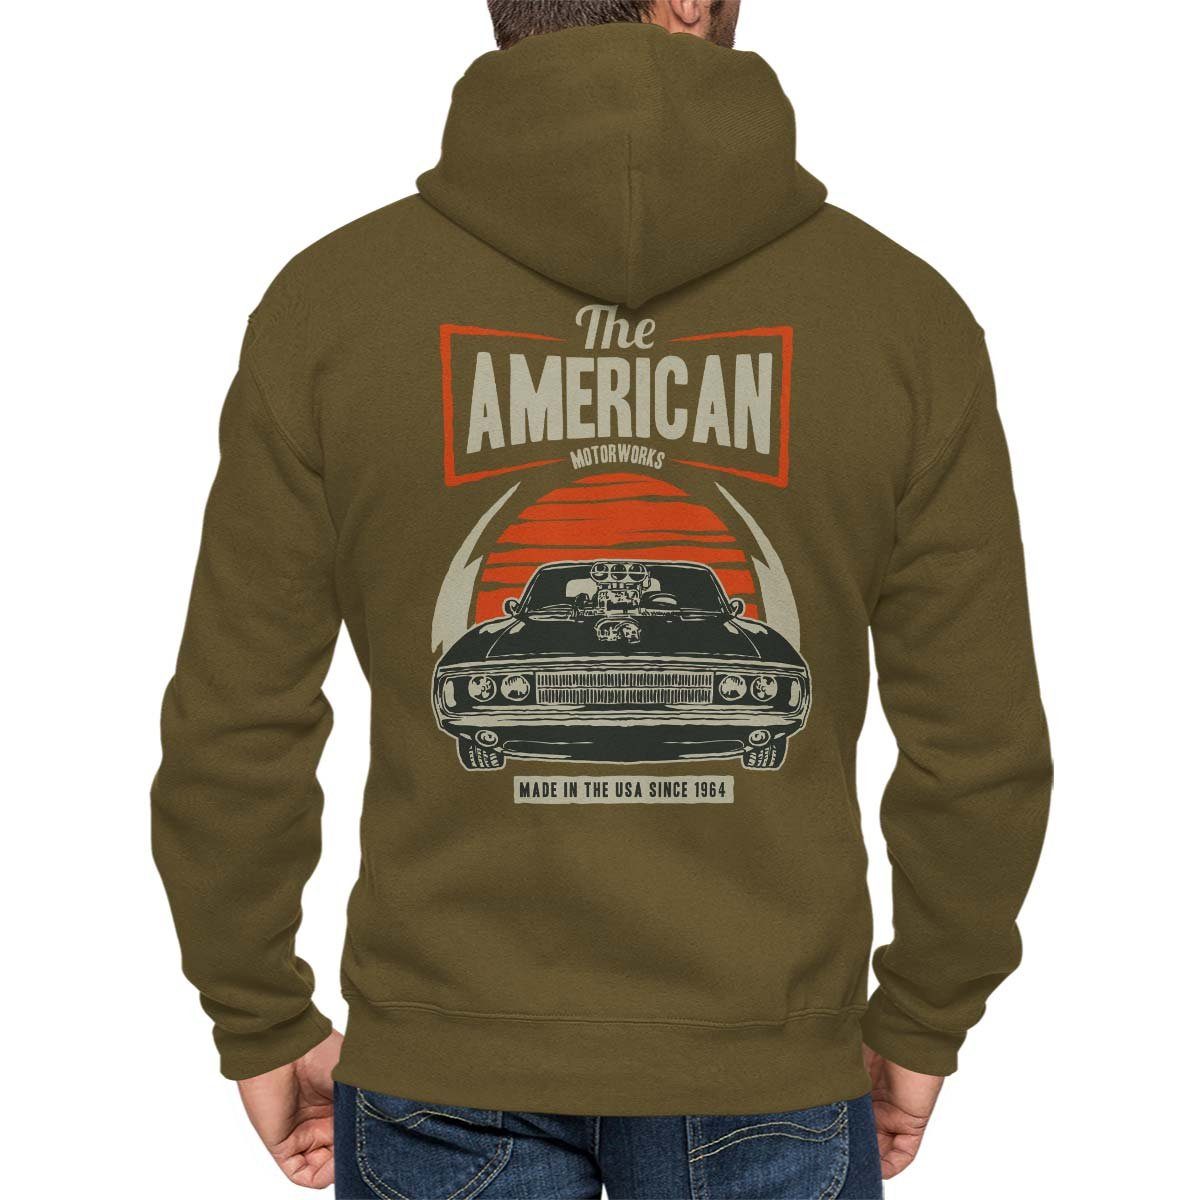 Rebel On Wheels Kapuzensweatjacke Zip / Motiv The American US-Car Hoodie Auto Khaki mit Kapuzenjacke